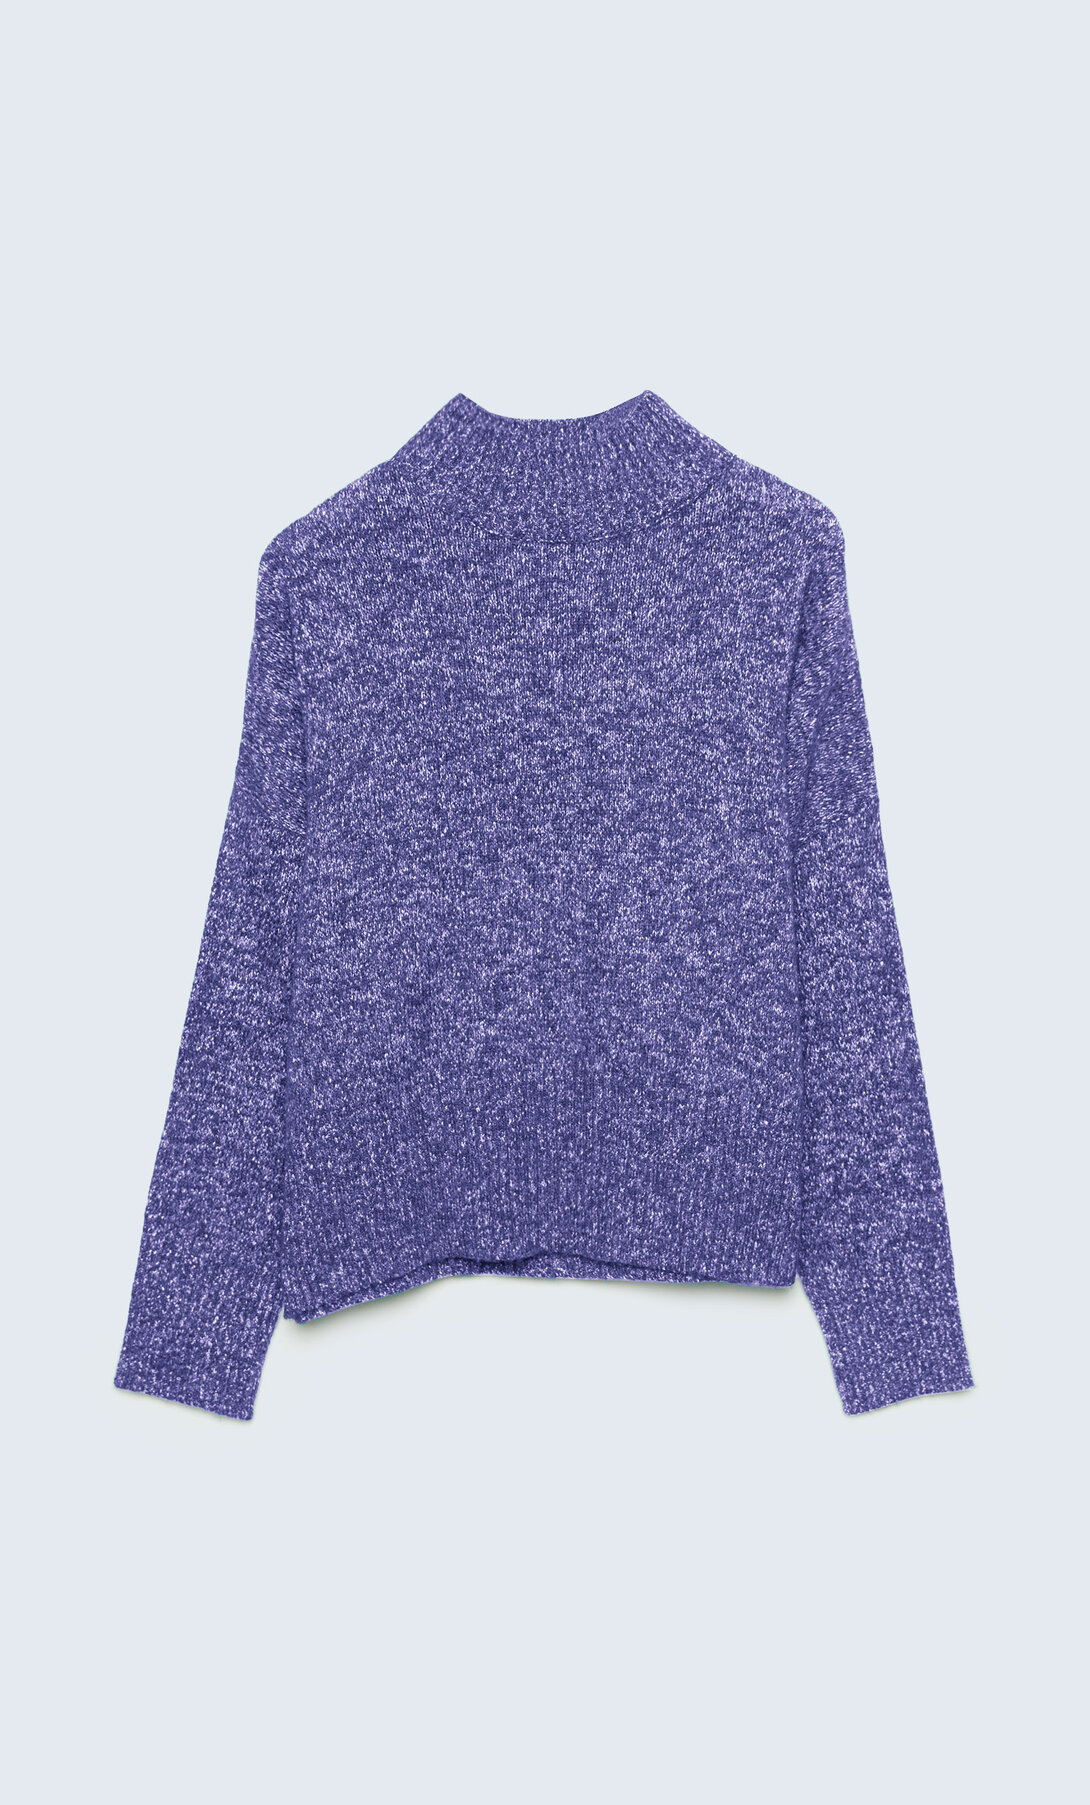 Eduavar Womens Casual Long Sleeve Color Block Soft Knit Mock Turtleneck Sweater Pullover Jumper Tops 